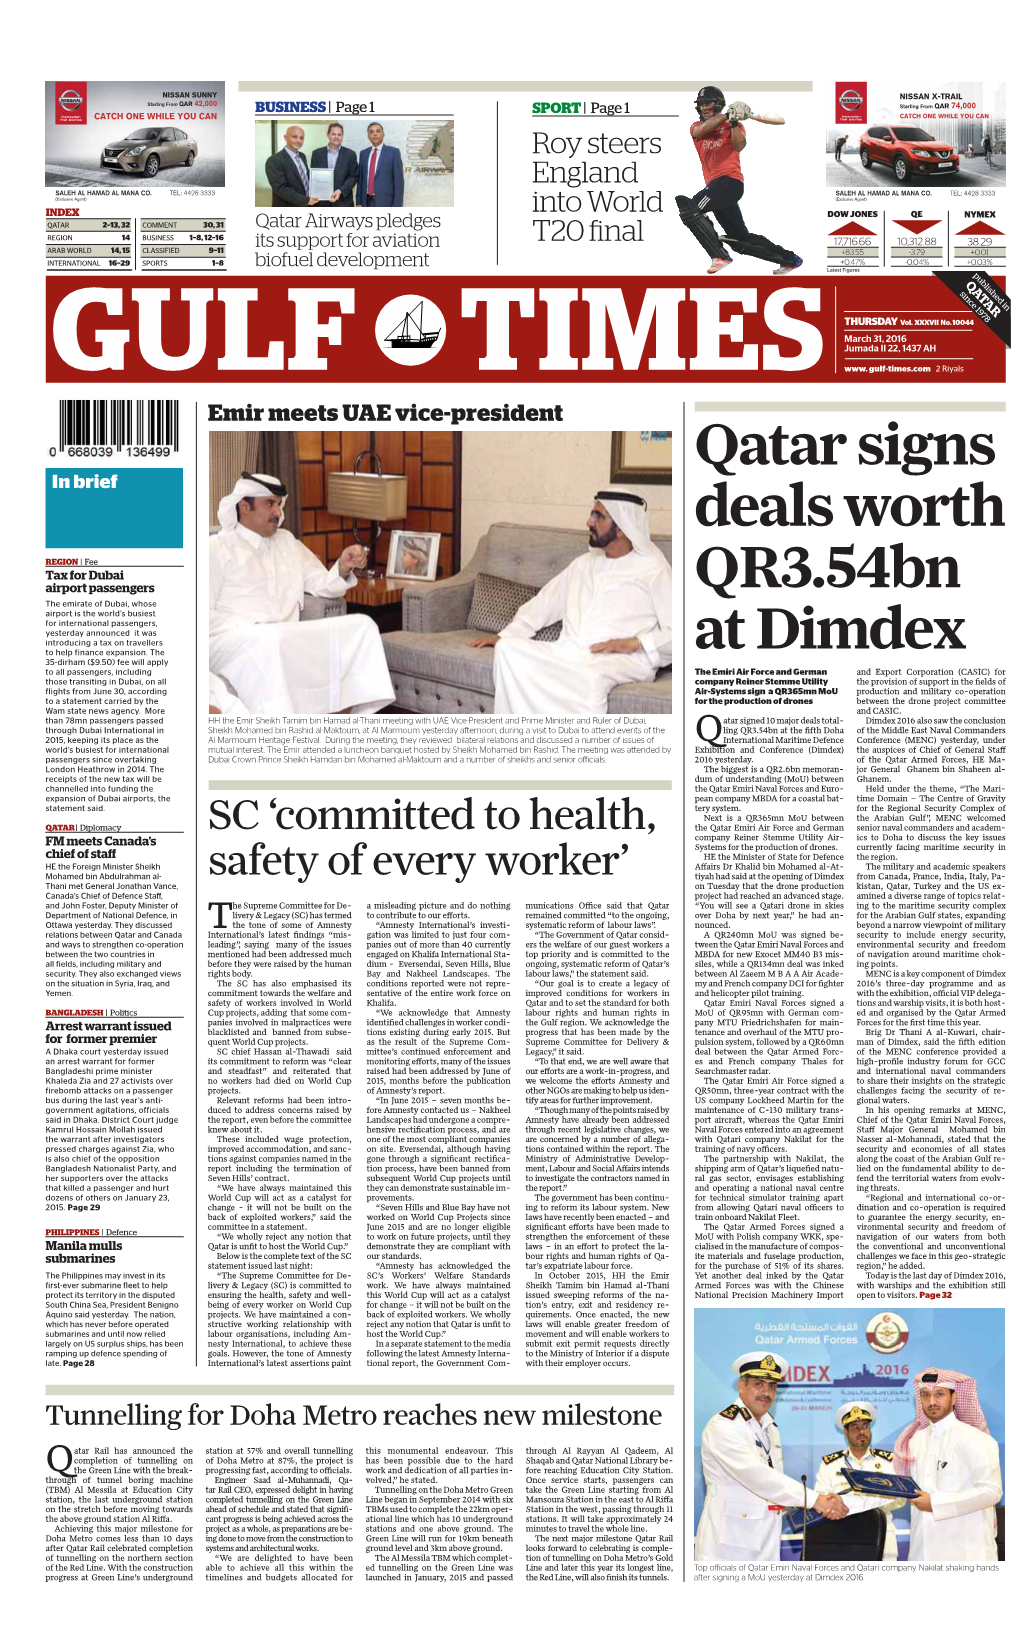 Qatar Signs Deals Worth QR3.54Bn at Dimdex